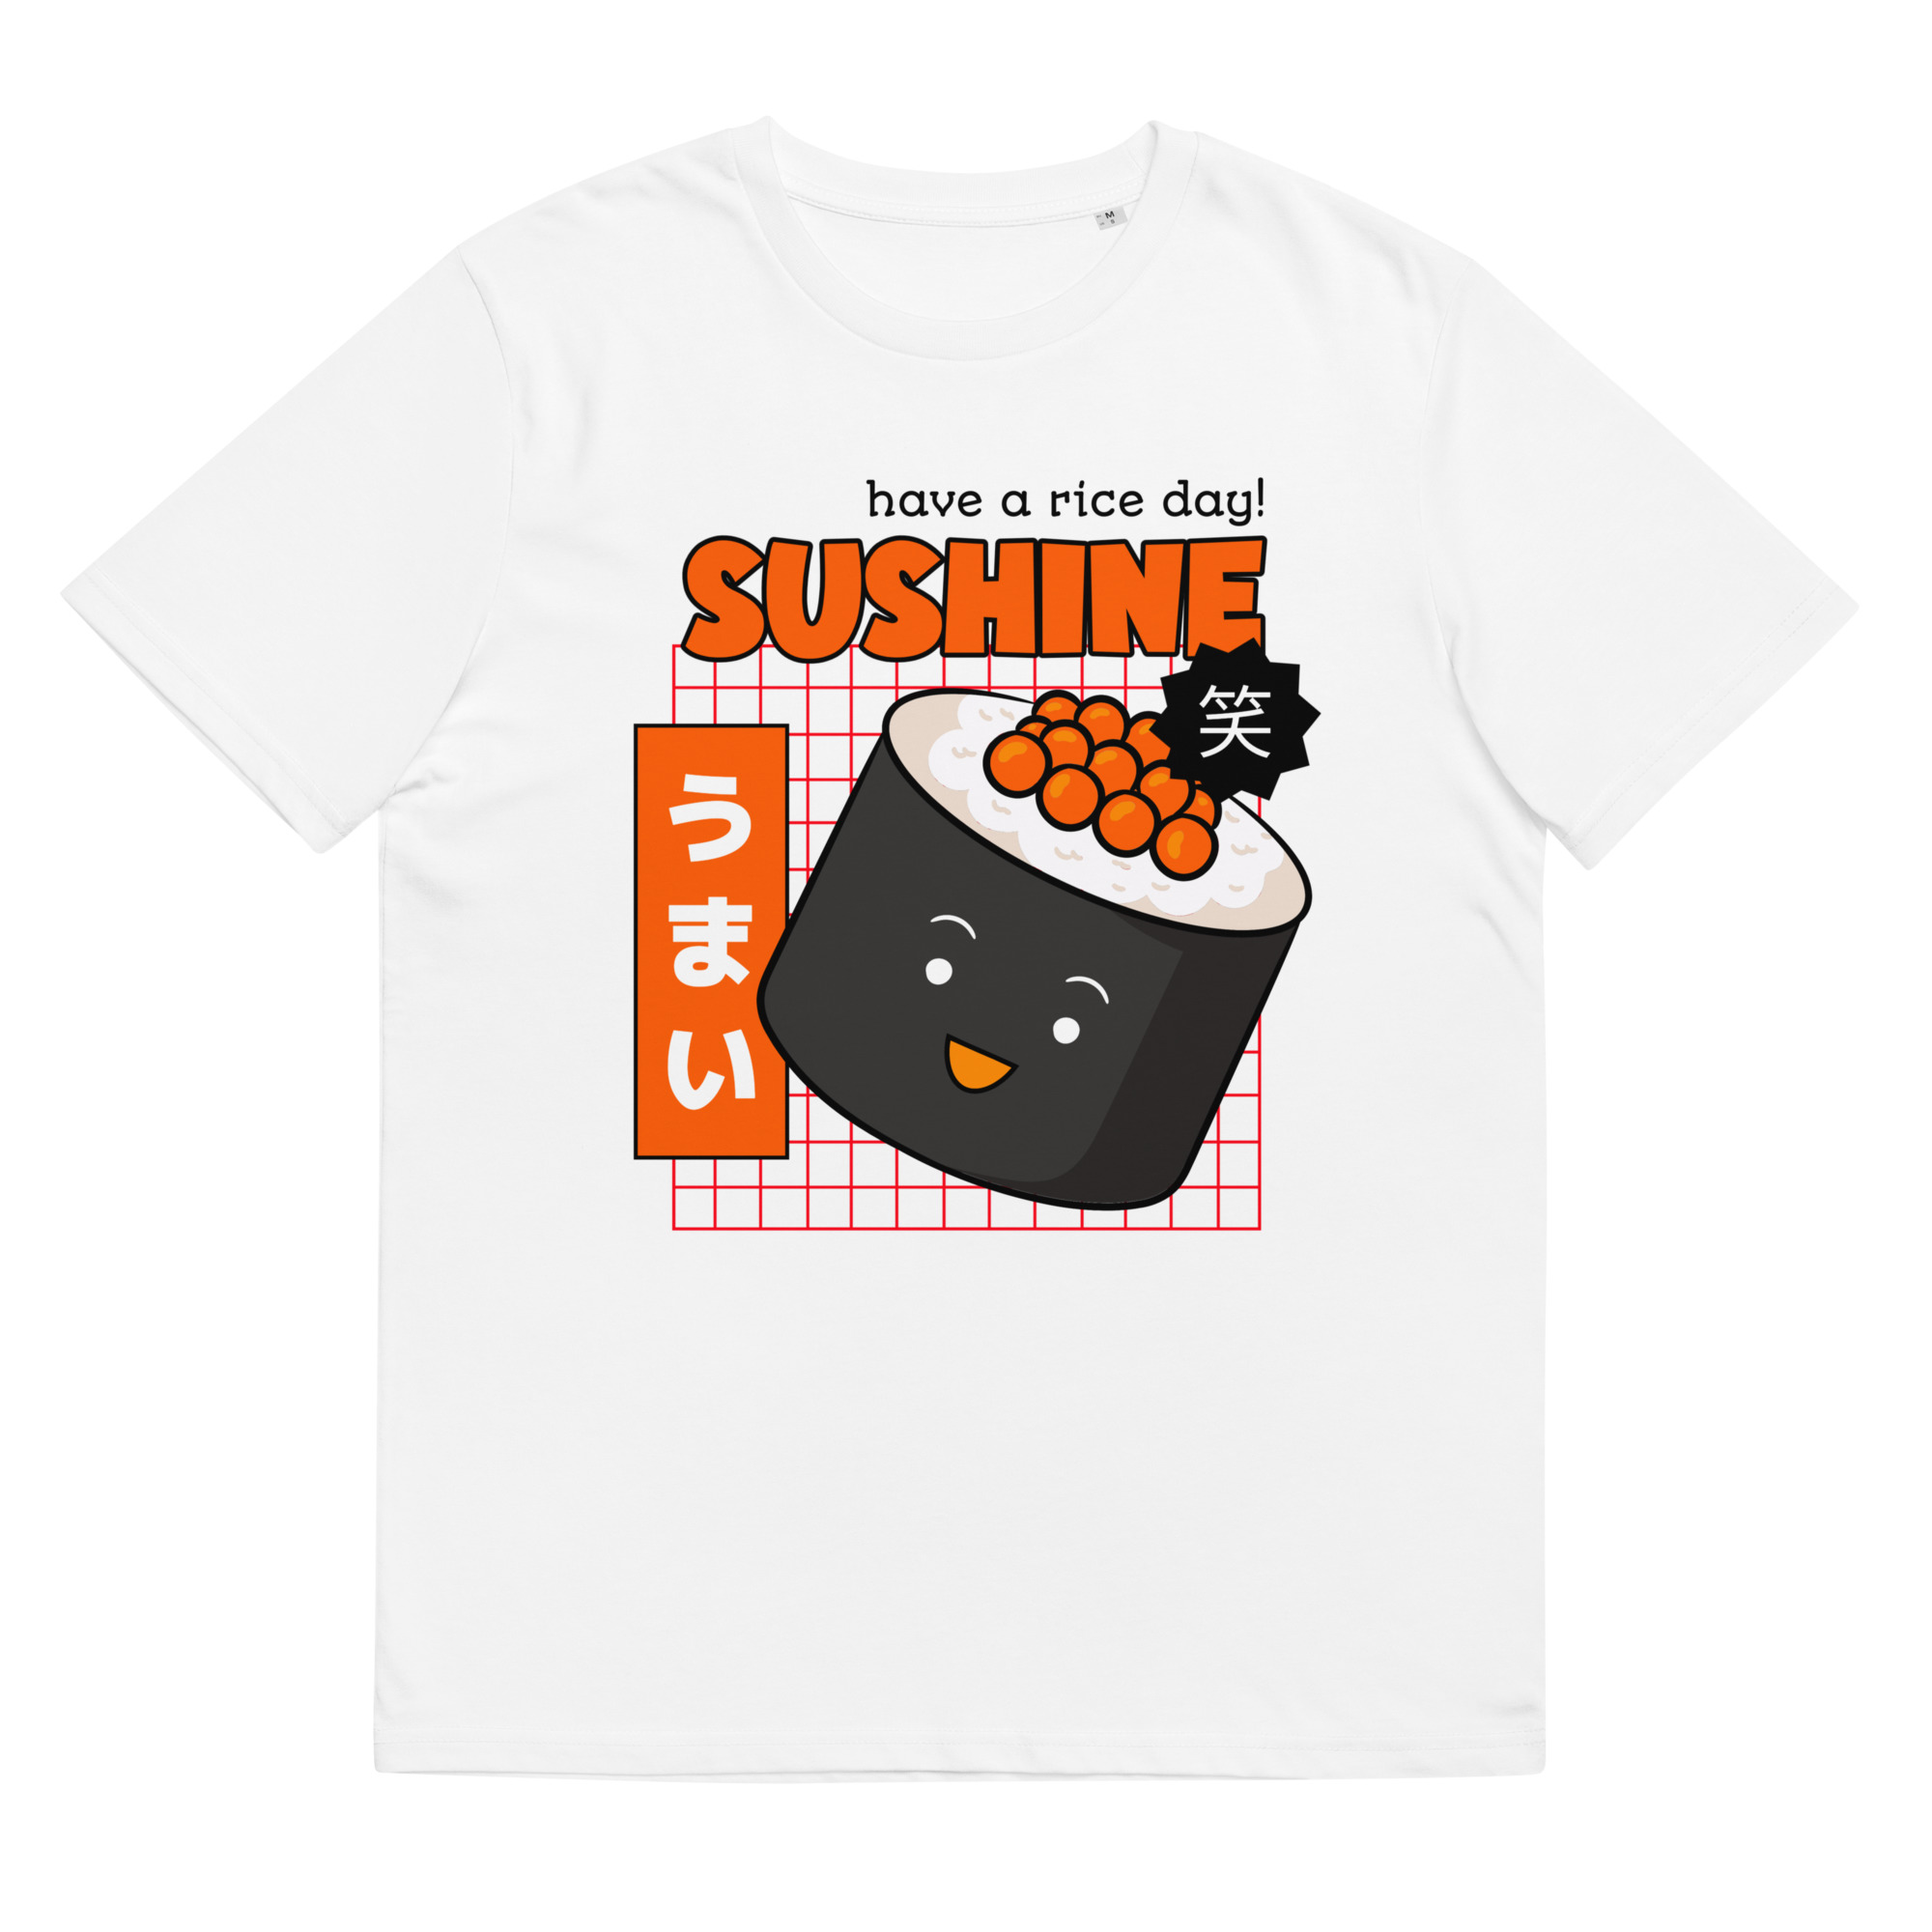 Have A Rice Day Sunshine - Organic Unisex Sushi T-Shirt